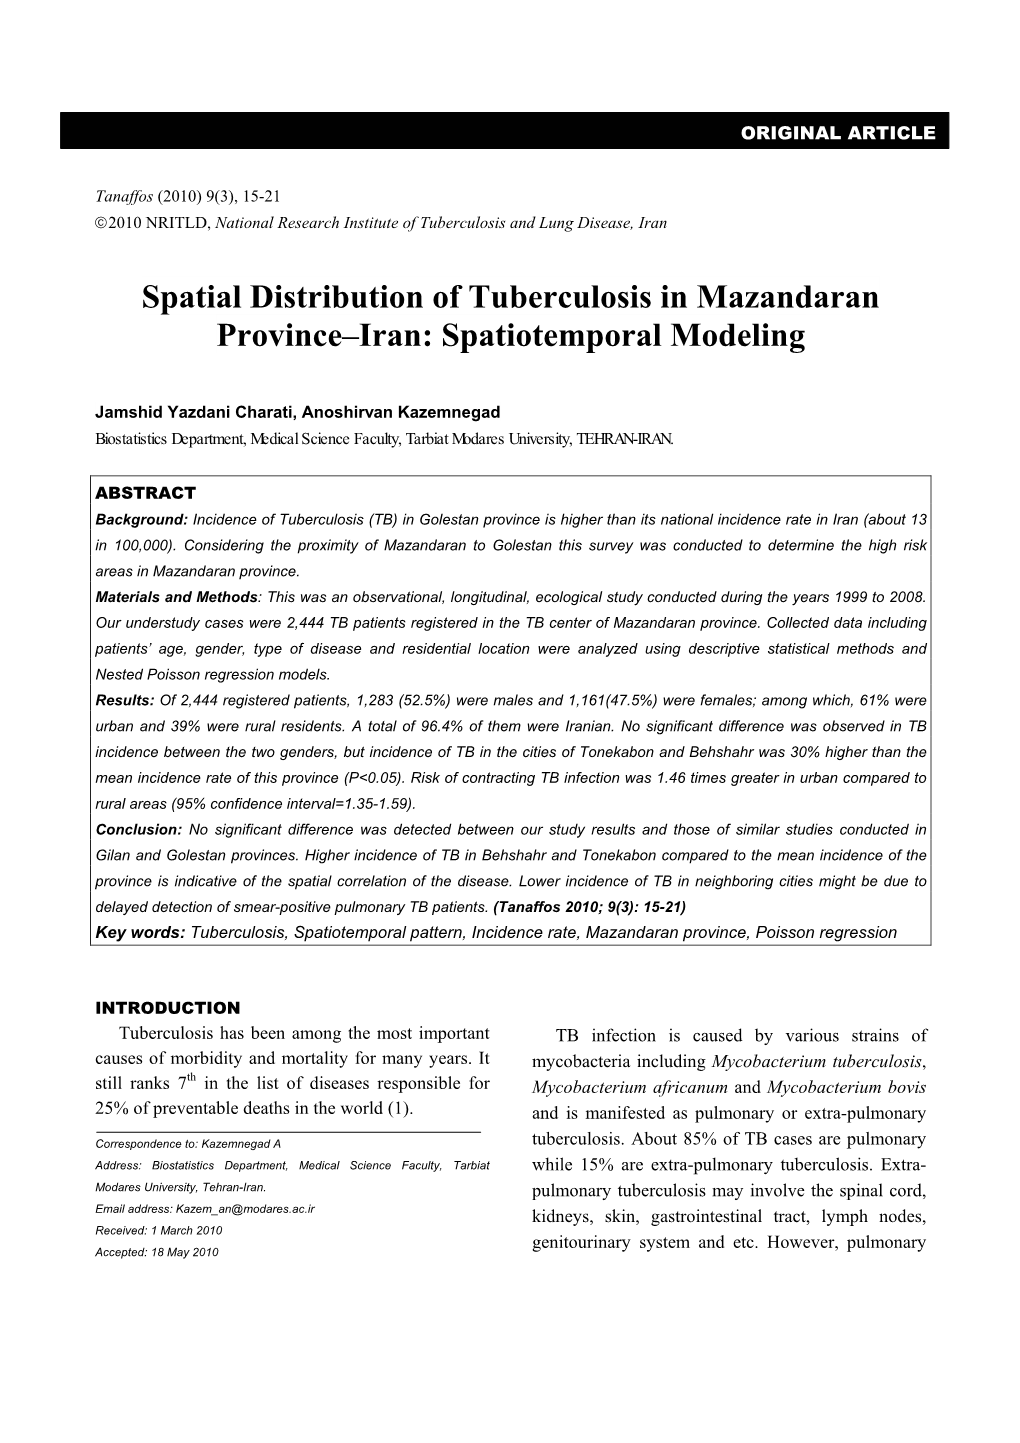 Spatial Distribution of Tuberculosis in Mazandaran Province–Iran: Spatiotemporal Modeling